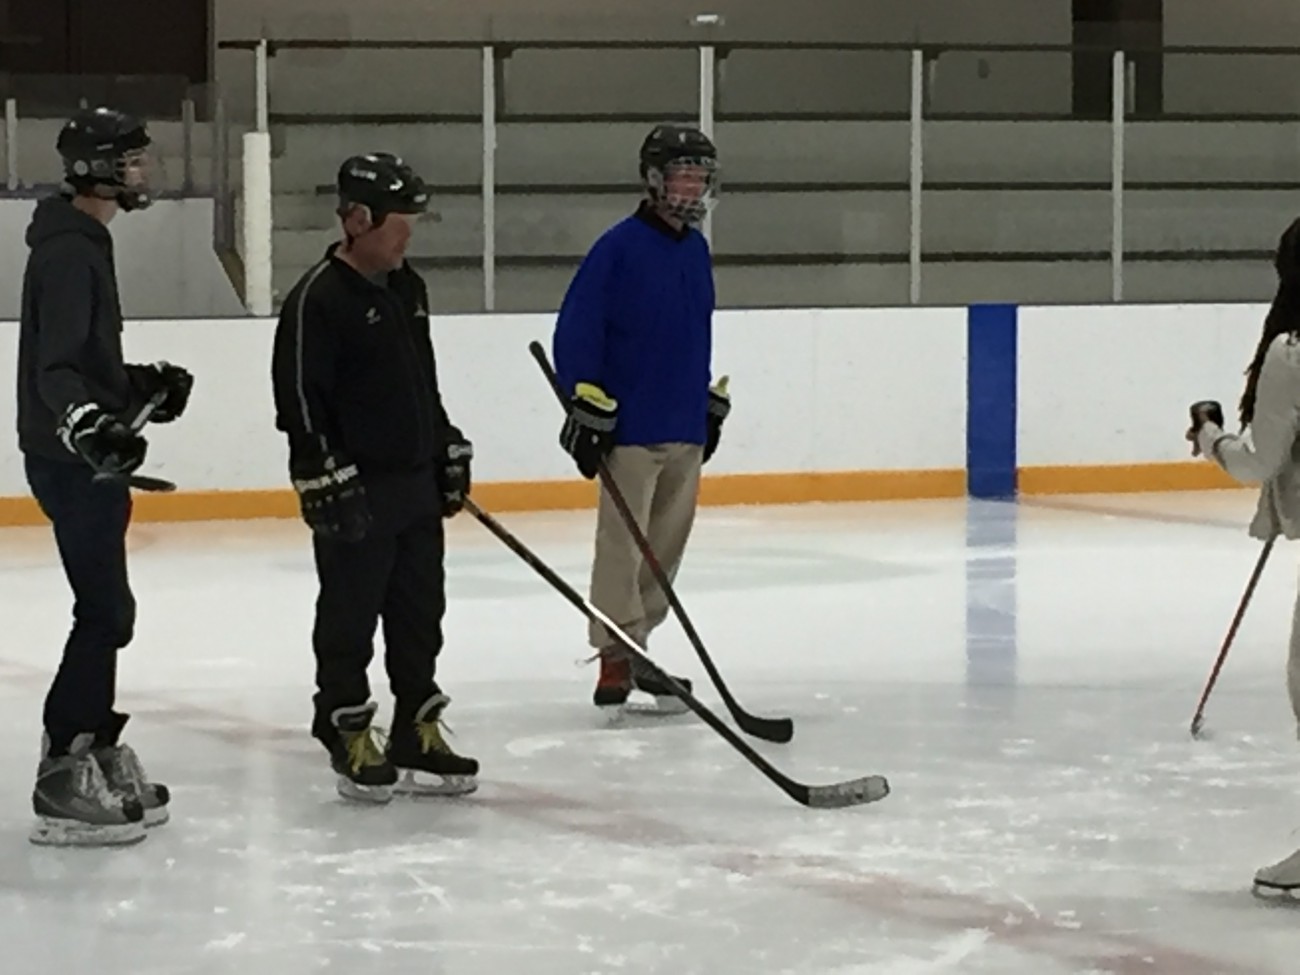 Mayor Walton playing hockey at Karen Magnussen Community Recreation Centre